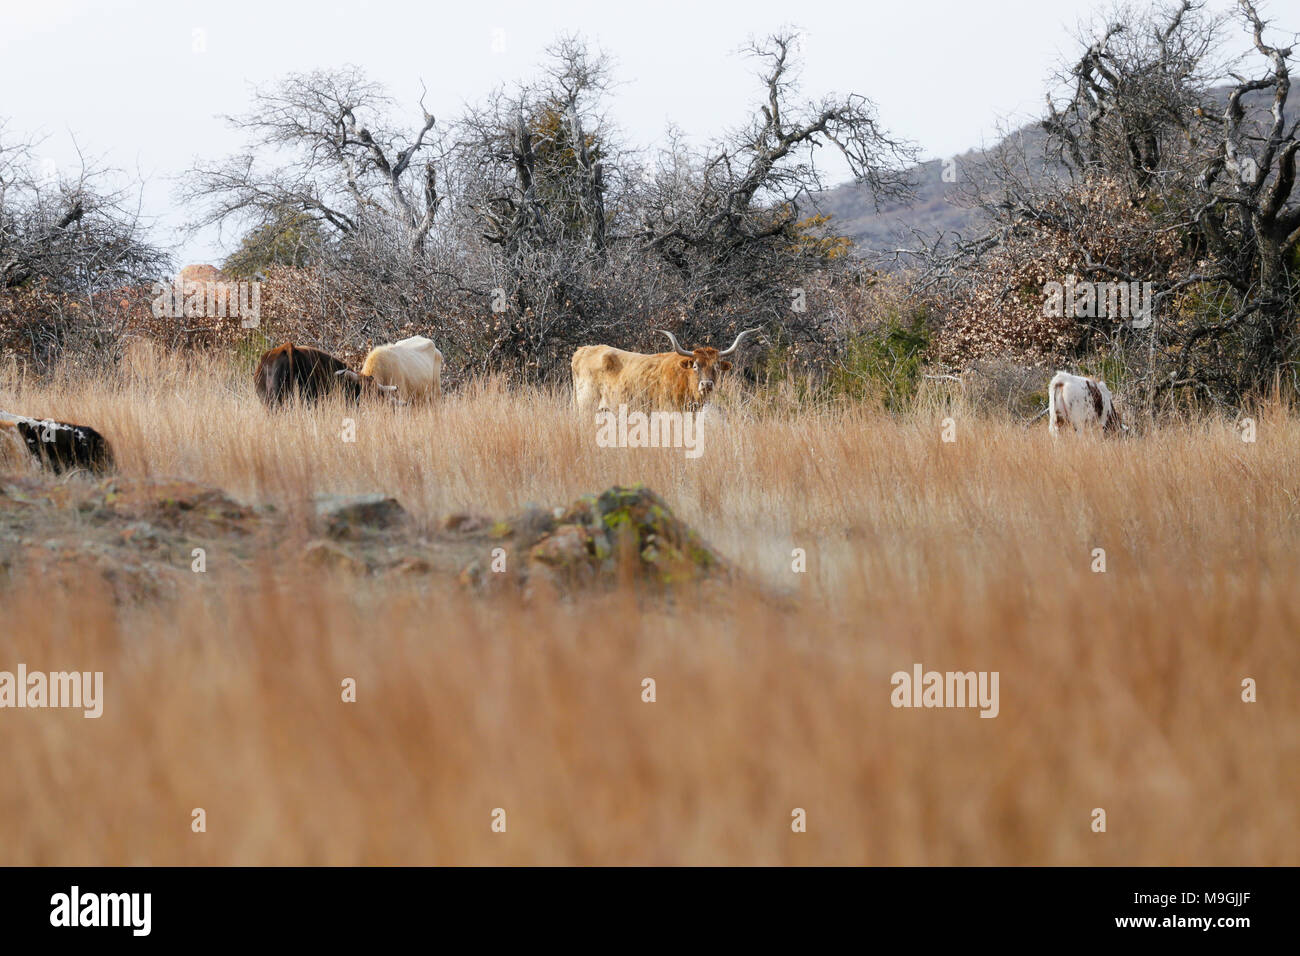 Texas Longhorn cattle on open range grasslands Stock Photo